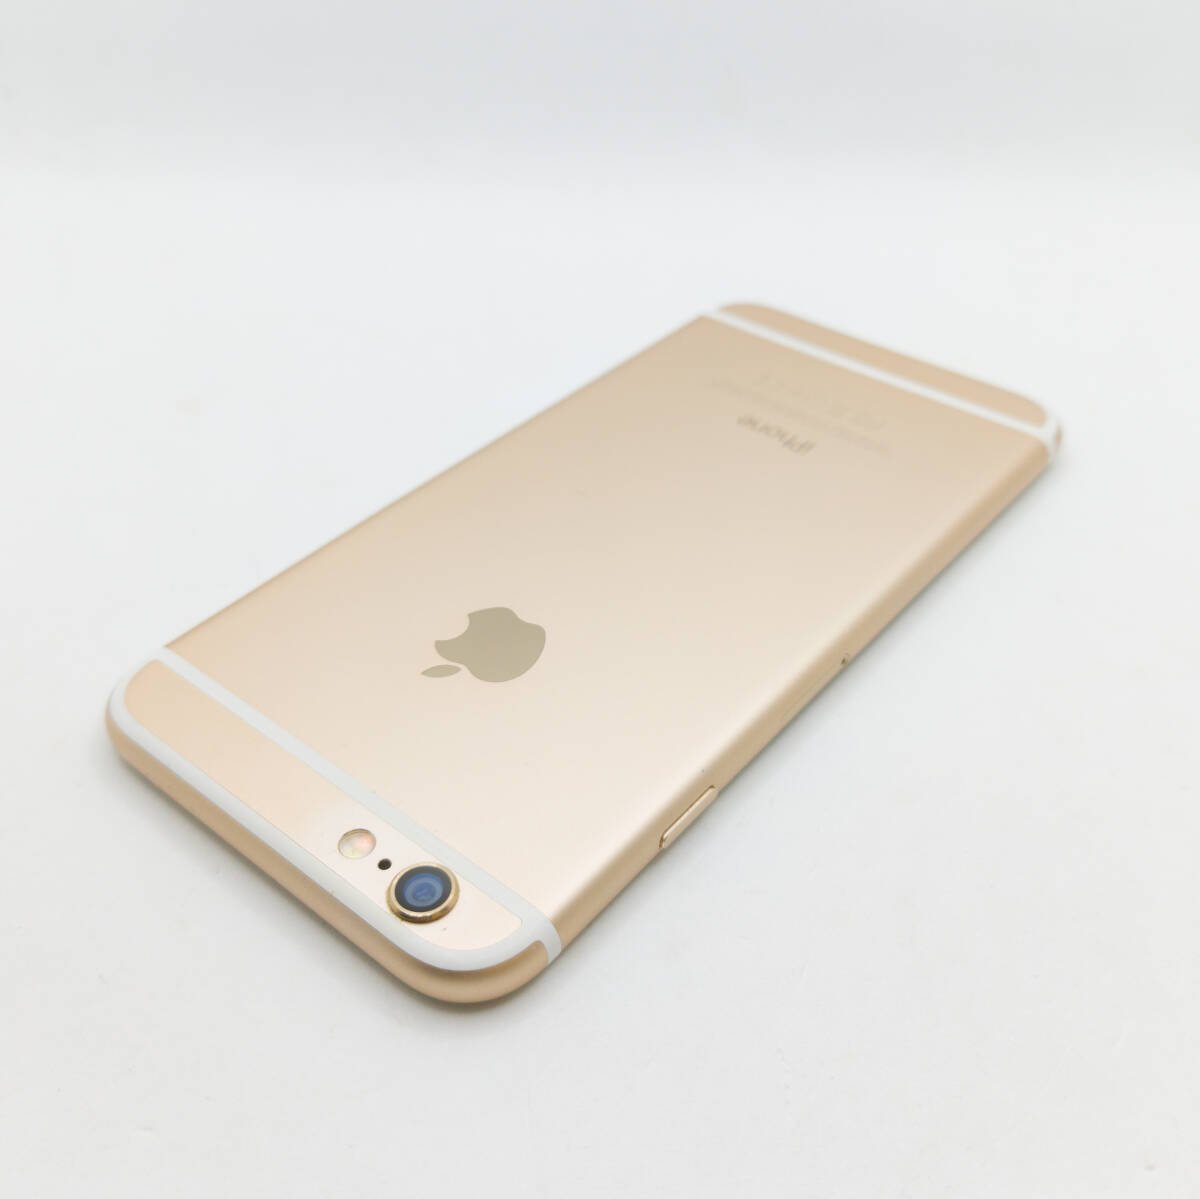 Apple iPhone 6 ゴールド 64GB SoftBank 判定〇 アップル アイフォン A1586 スマートフォン スマホ 携帯電話 本体 #ST-02990